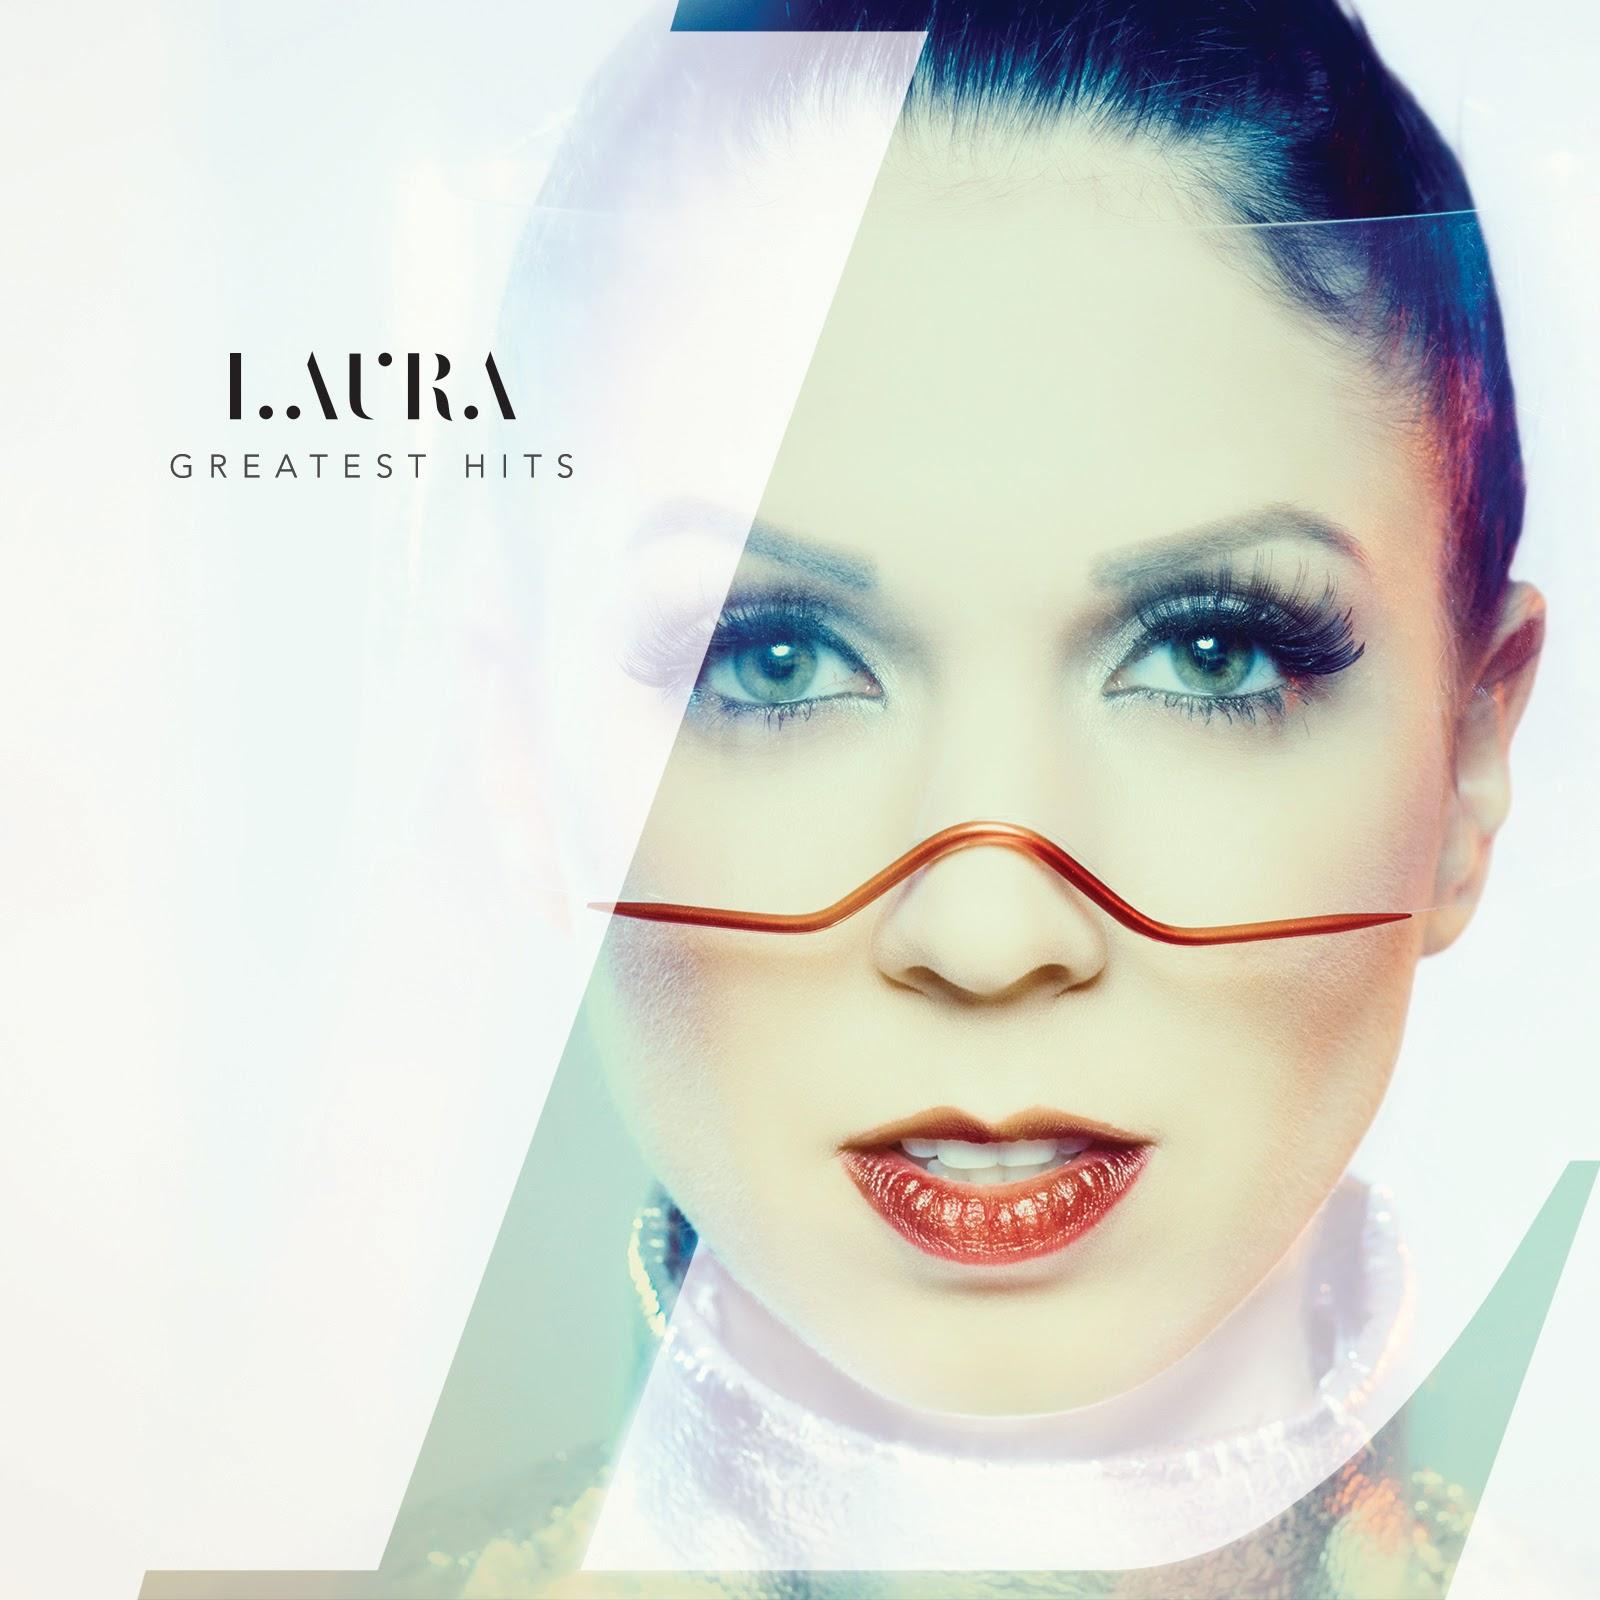 LAURA - GREATEST HITS (2017) CD